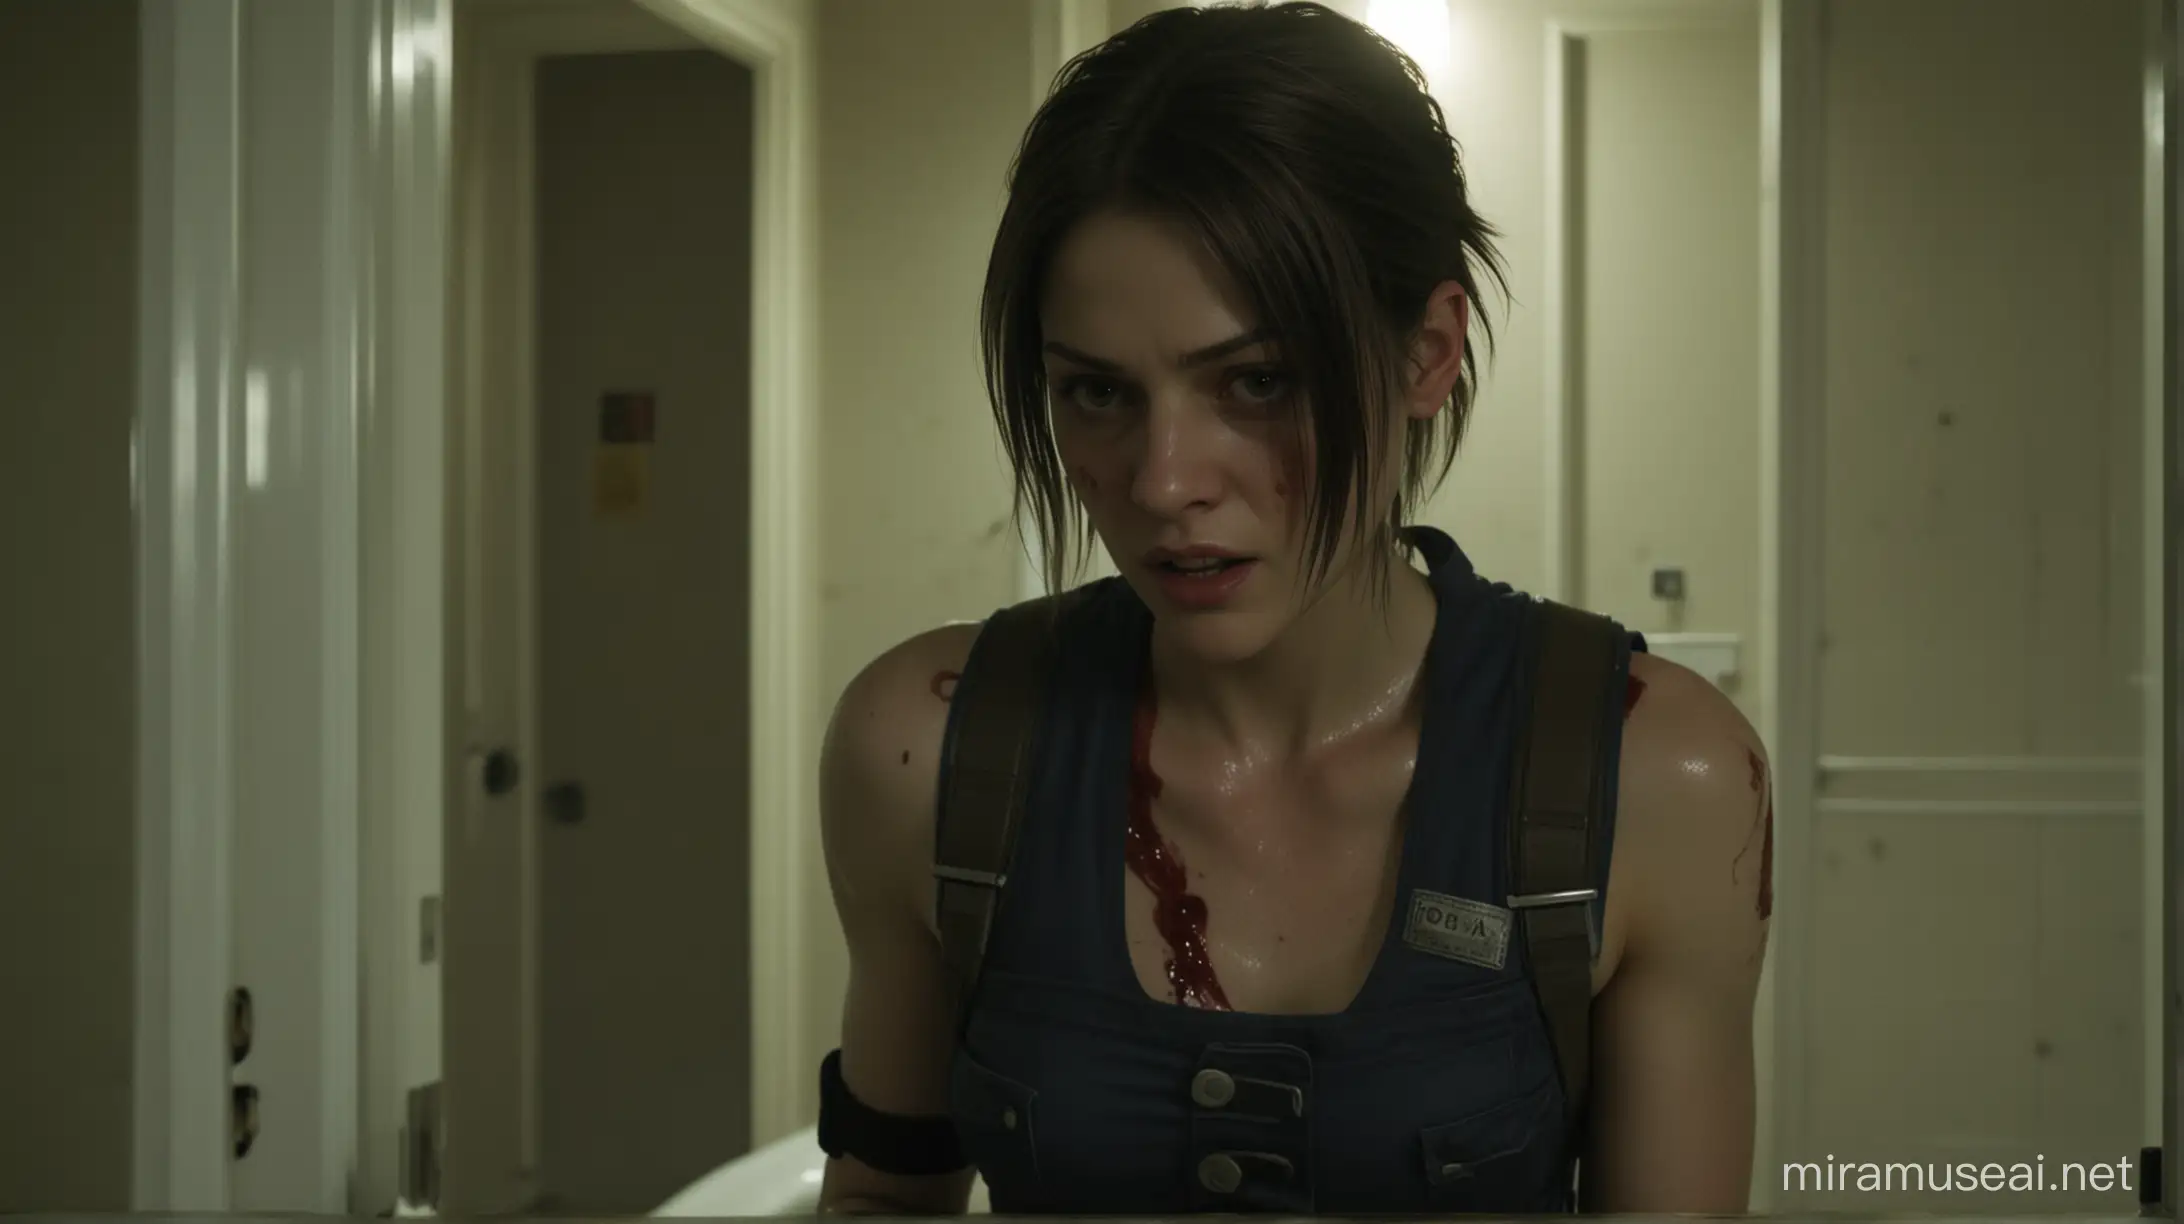 Survivor Reflections Jill Valentines Wounded Gaze in a Dark Resident Evil Bathroom